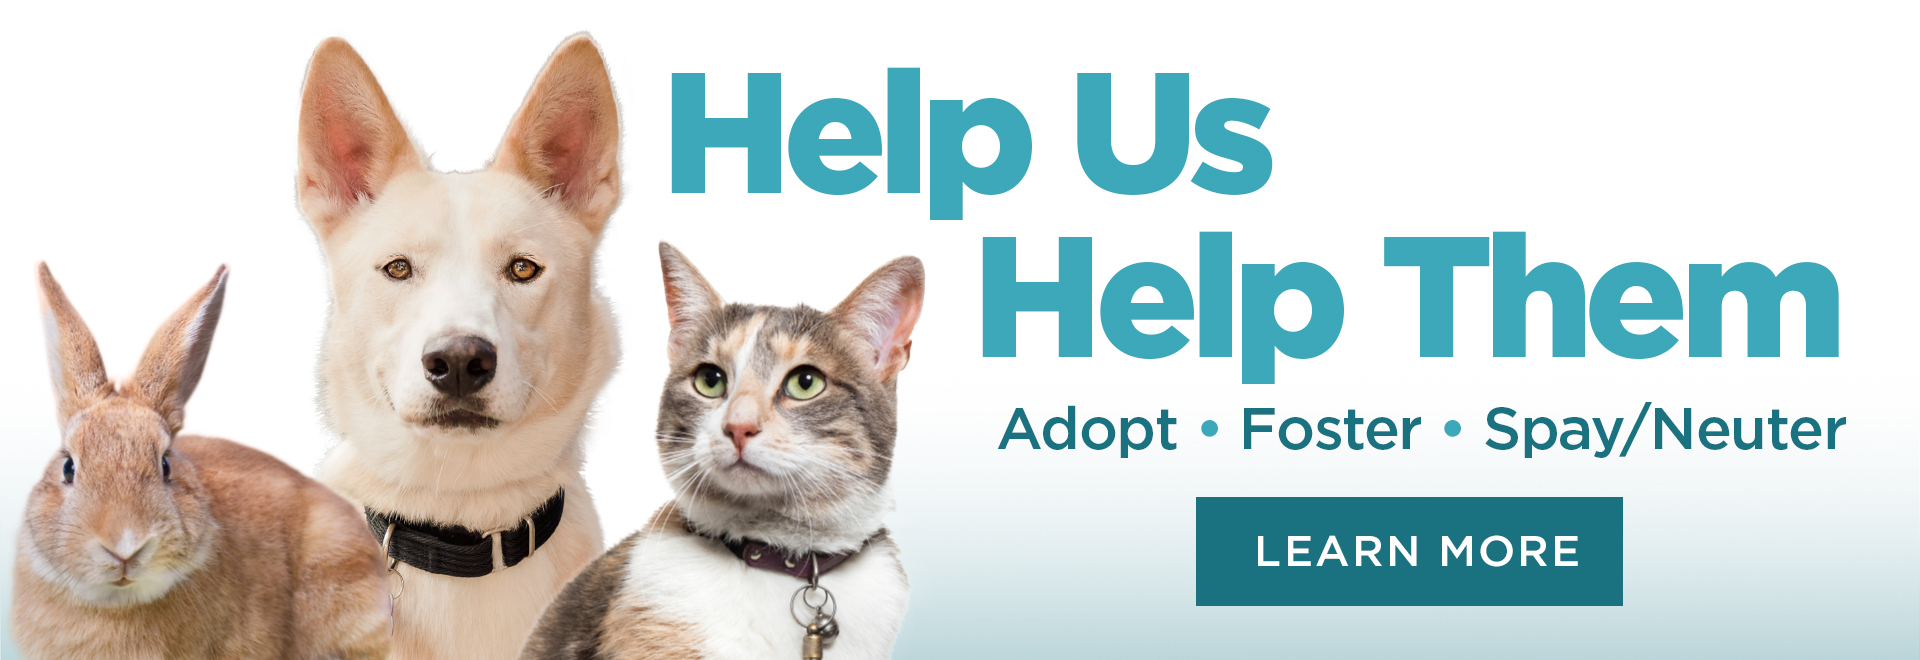 Help Us, Help Them | Adopt Foster Spay/Neuter